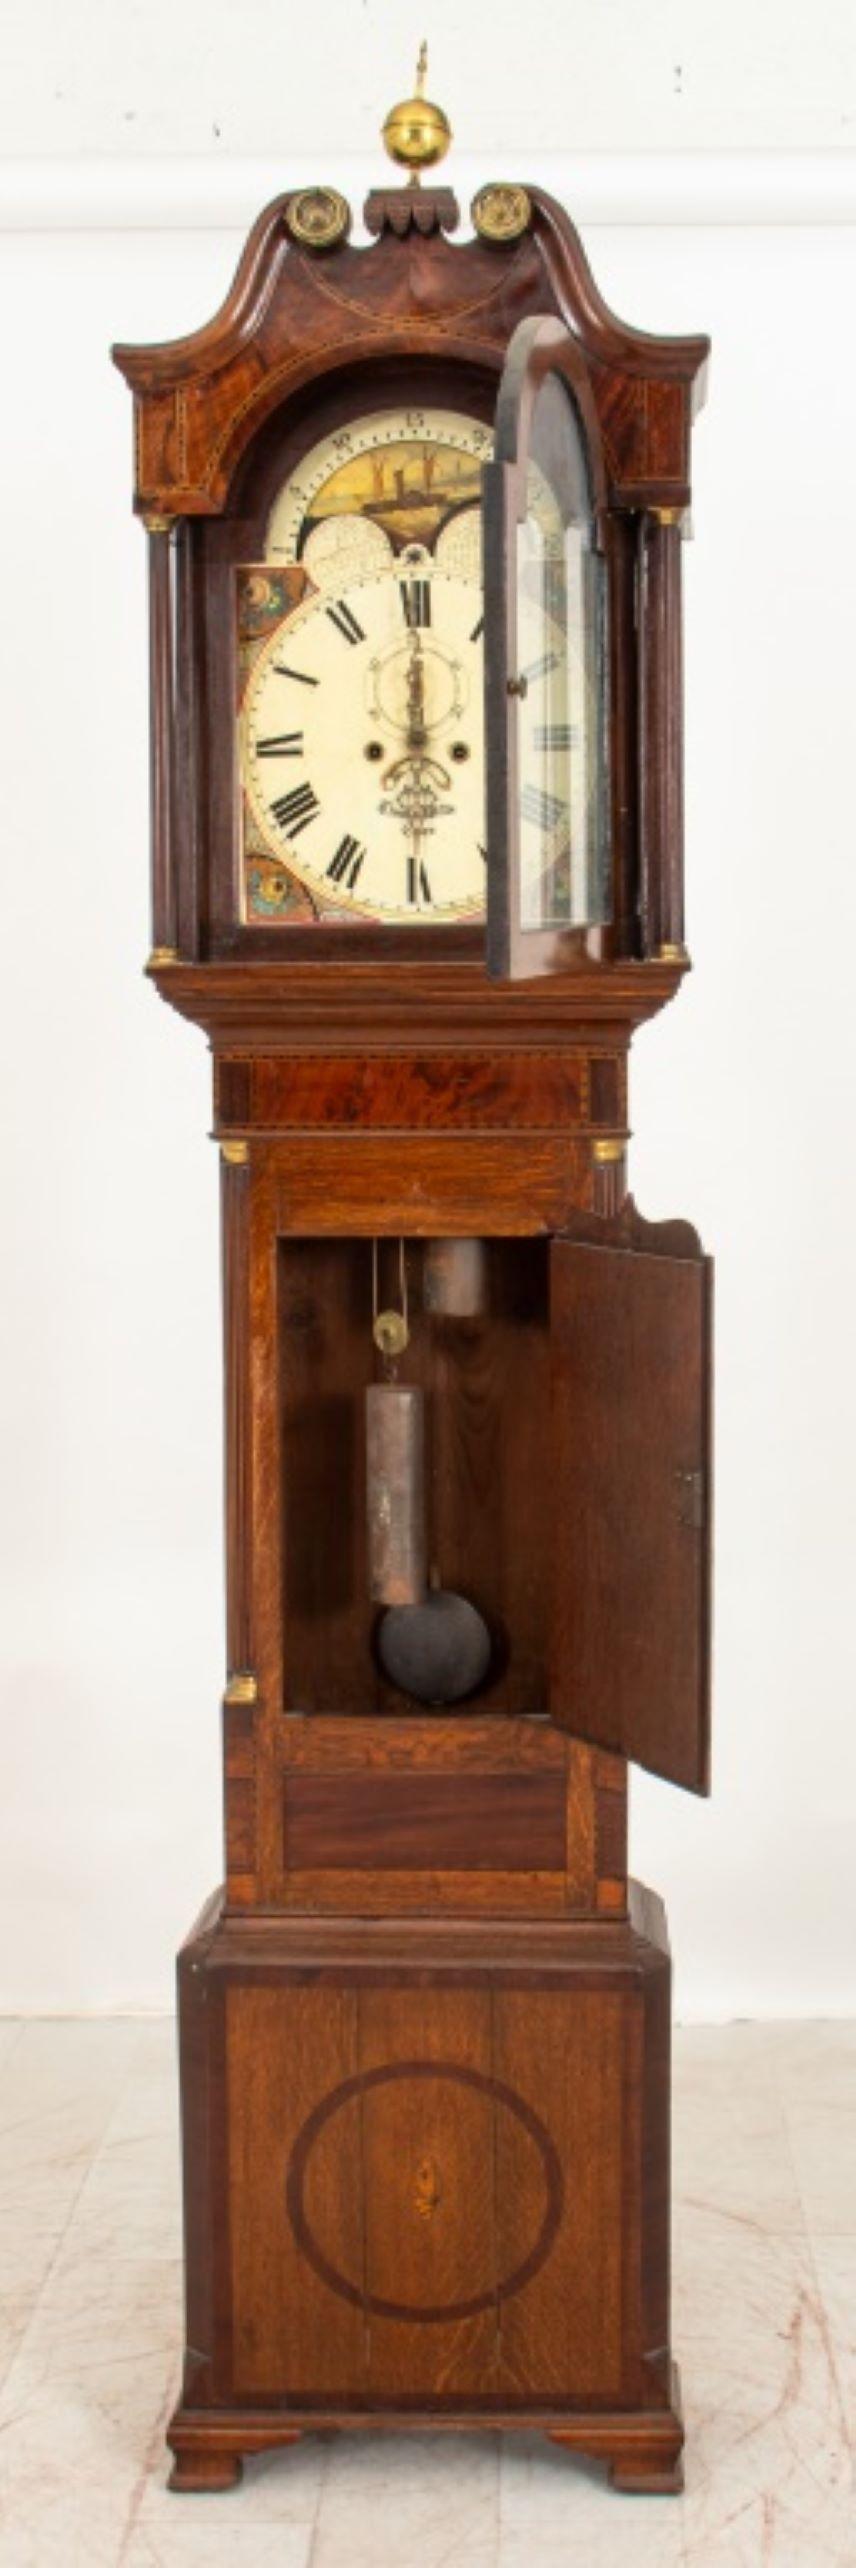 Thomas Wills George III Longcase Clock, 19th Century For Sale 3